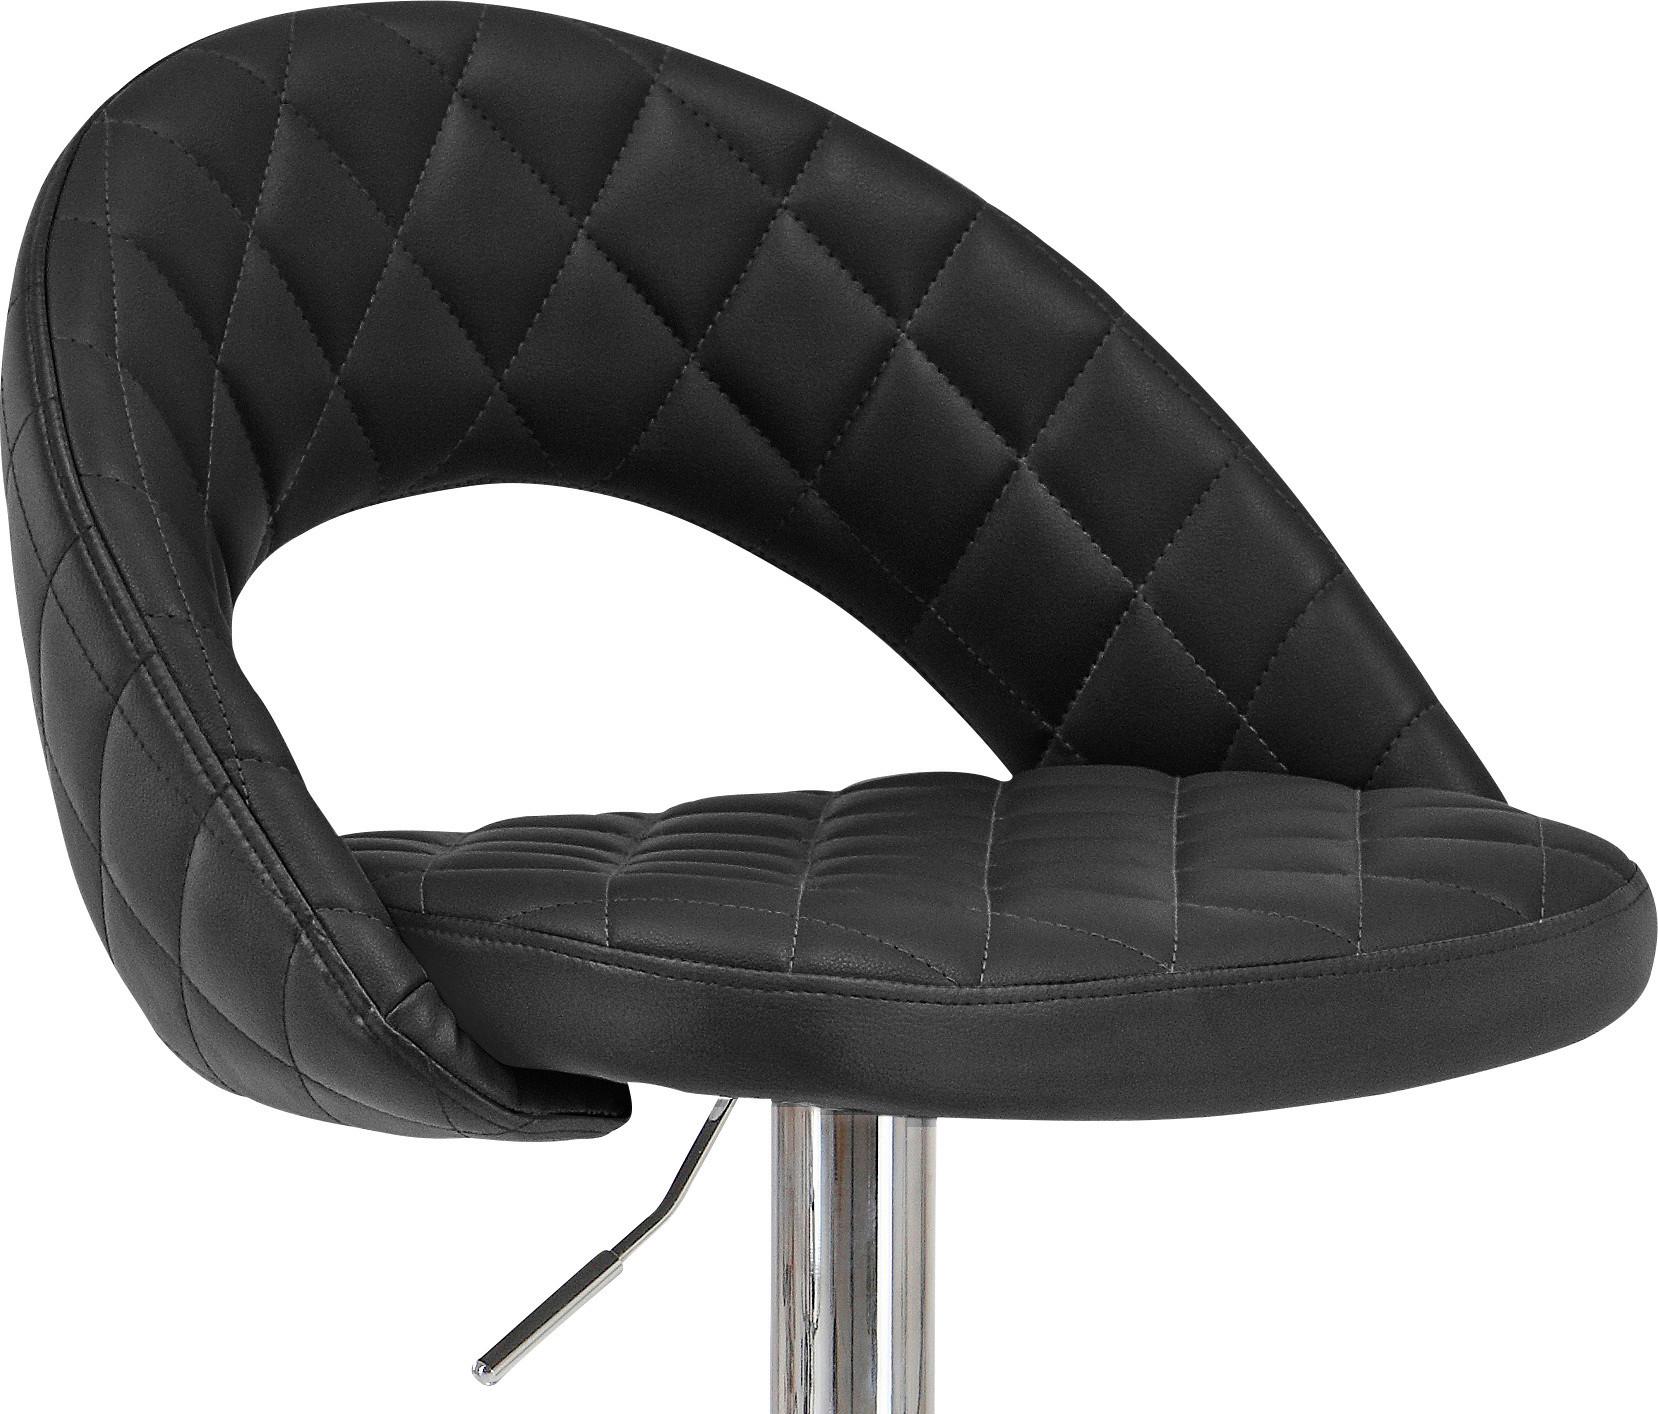 Barová Židle Martin - černá/barvy chromu, Moderní, kov/textil (55/89-110/53cm)